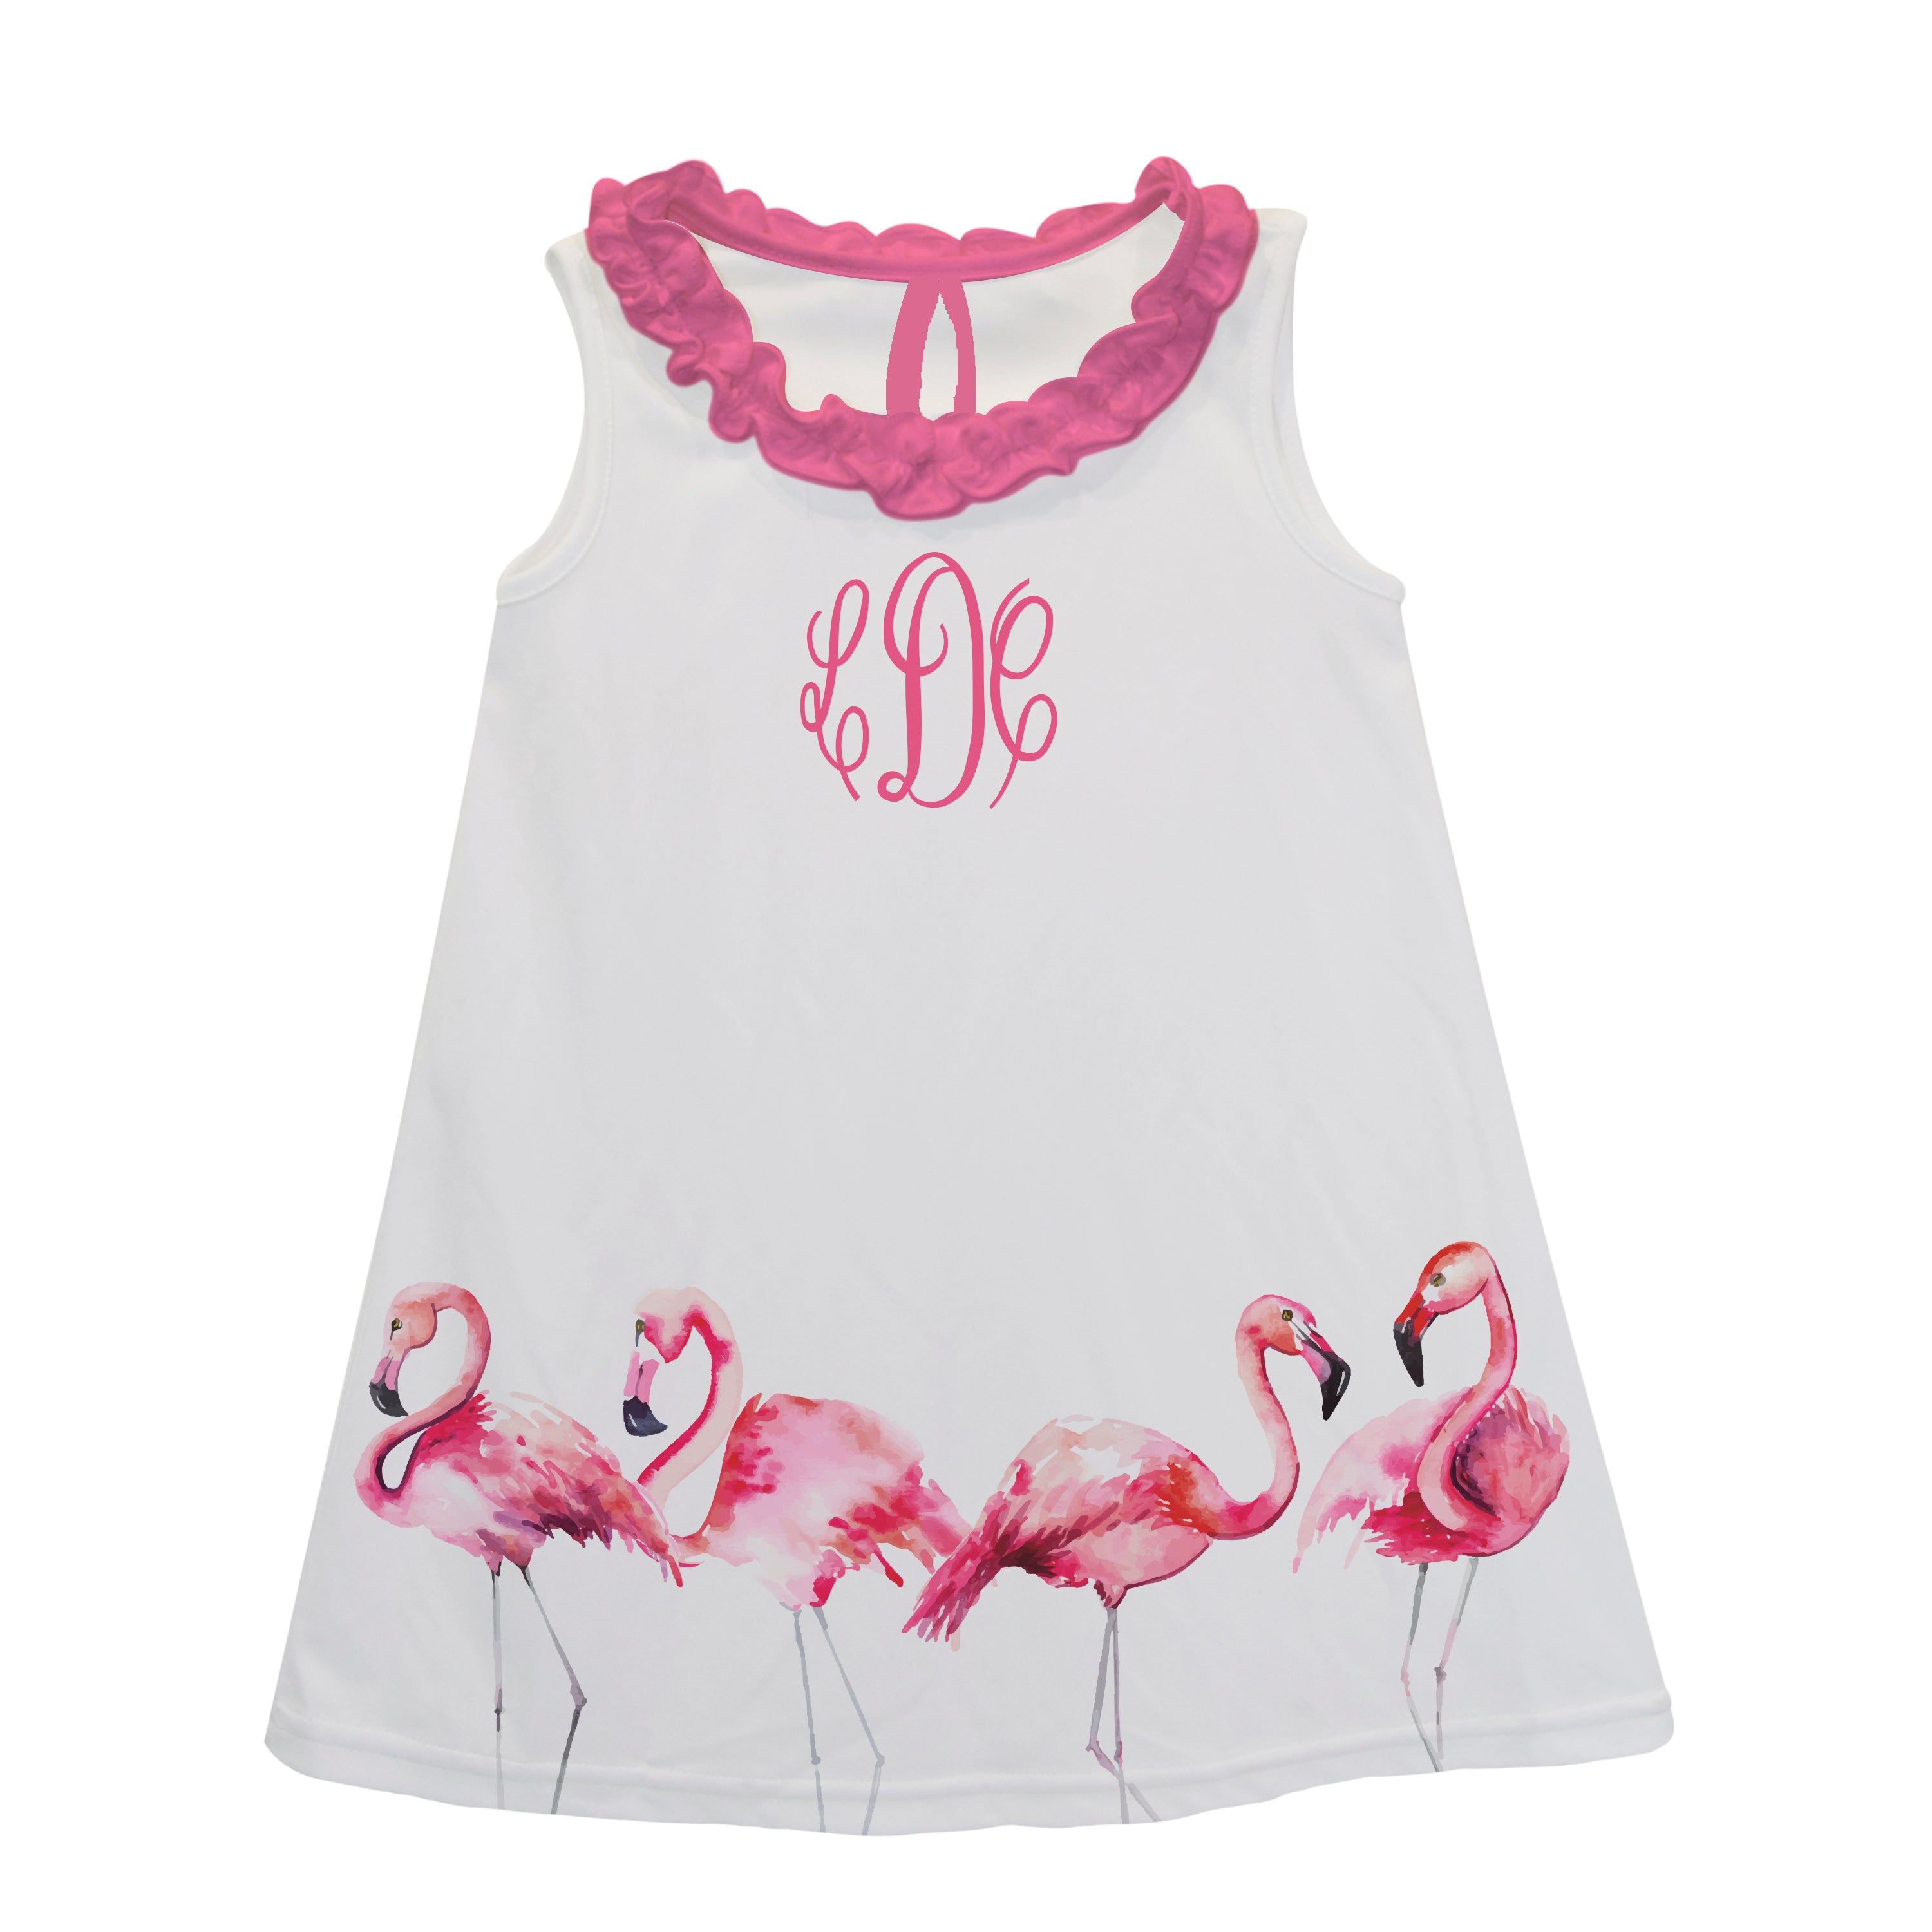 Monogrammed Flamingo Shirt For Girls